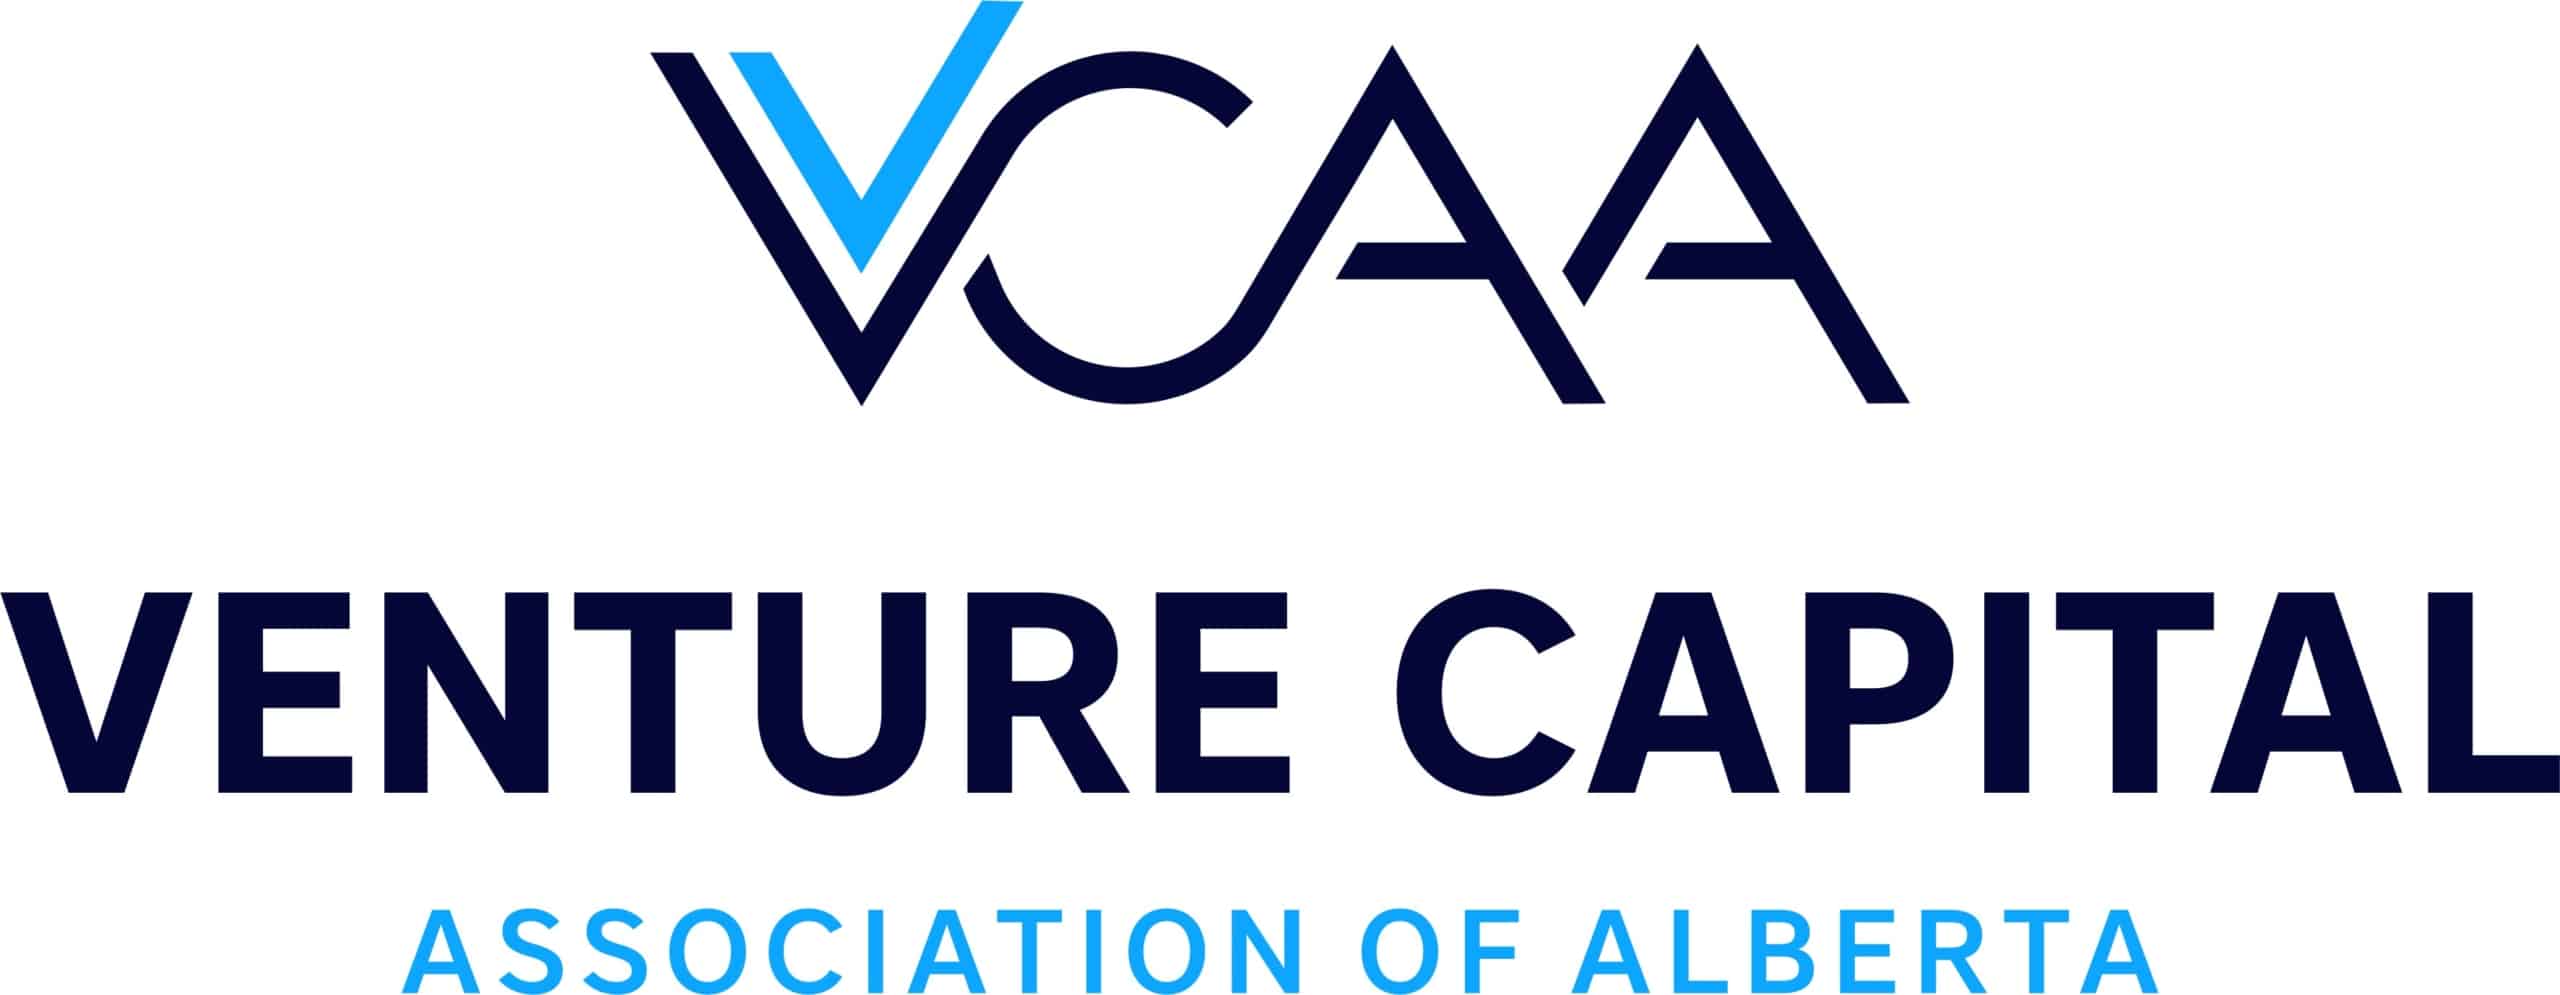 Venture Capital Association of Alberta